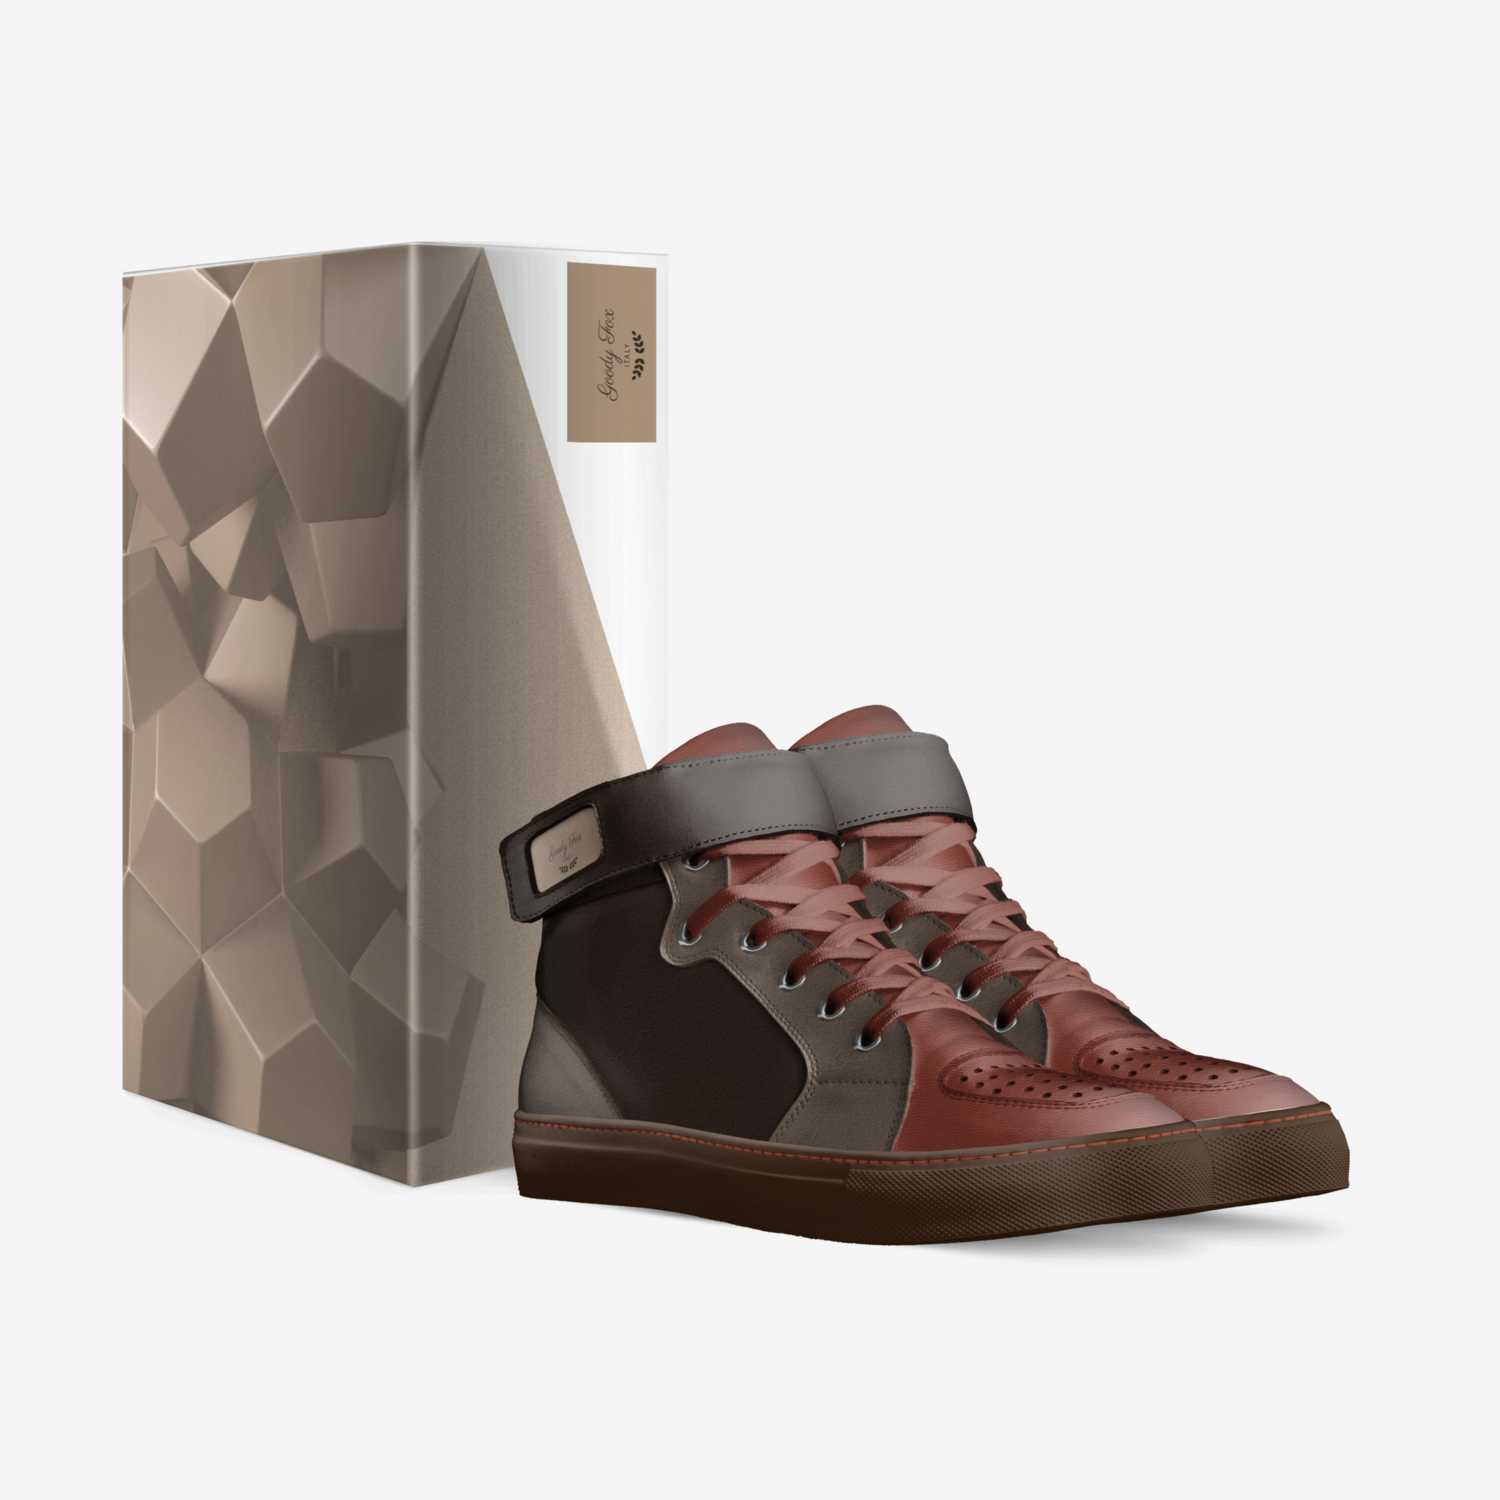 Goody Fox custom made in Italy shoes by Glenn Fairley | Box view